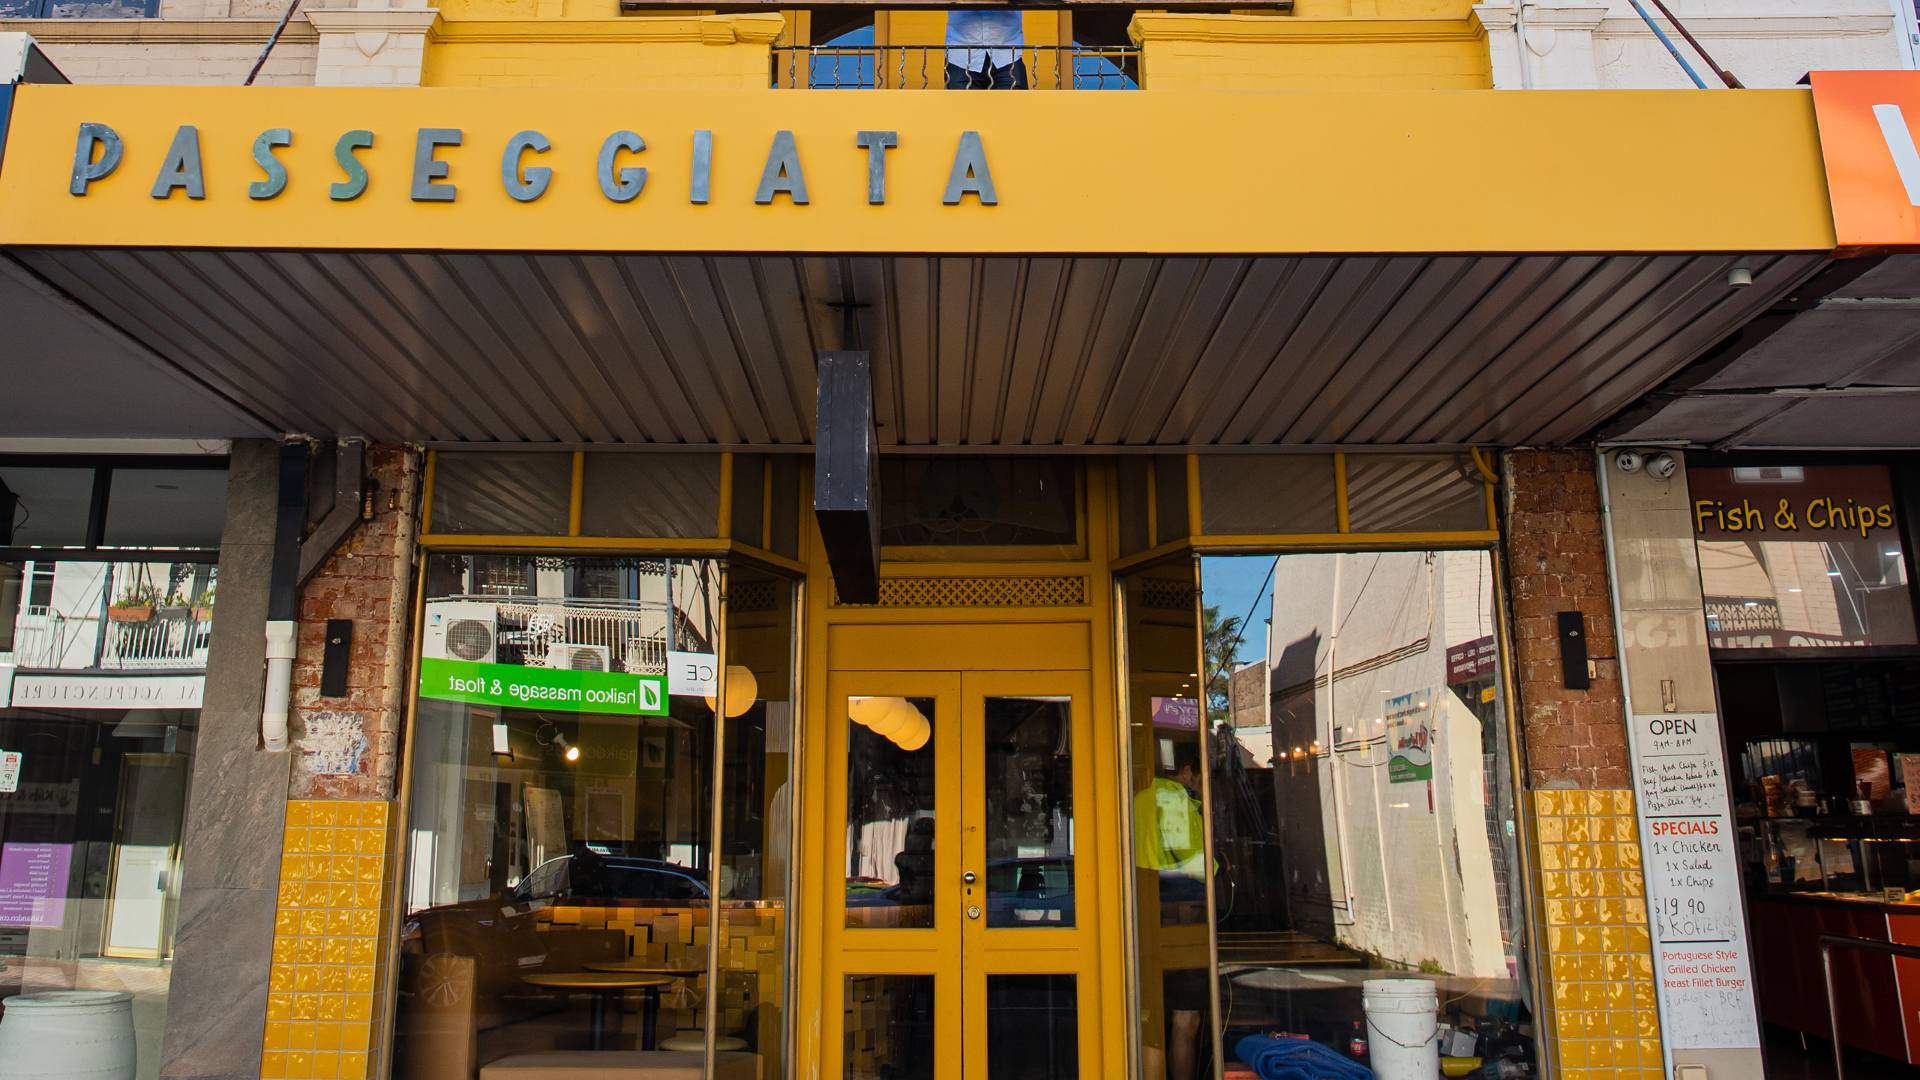 Former Sagra Owner Nigel Ward Has Opened His Ambitious New Italian Restaurant Passeggiata